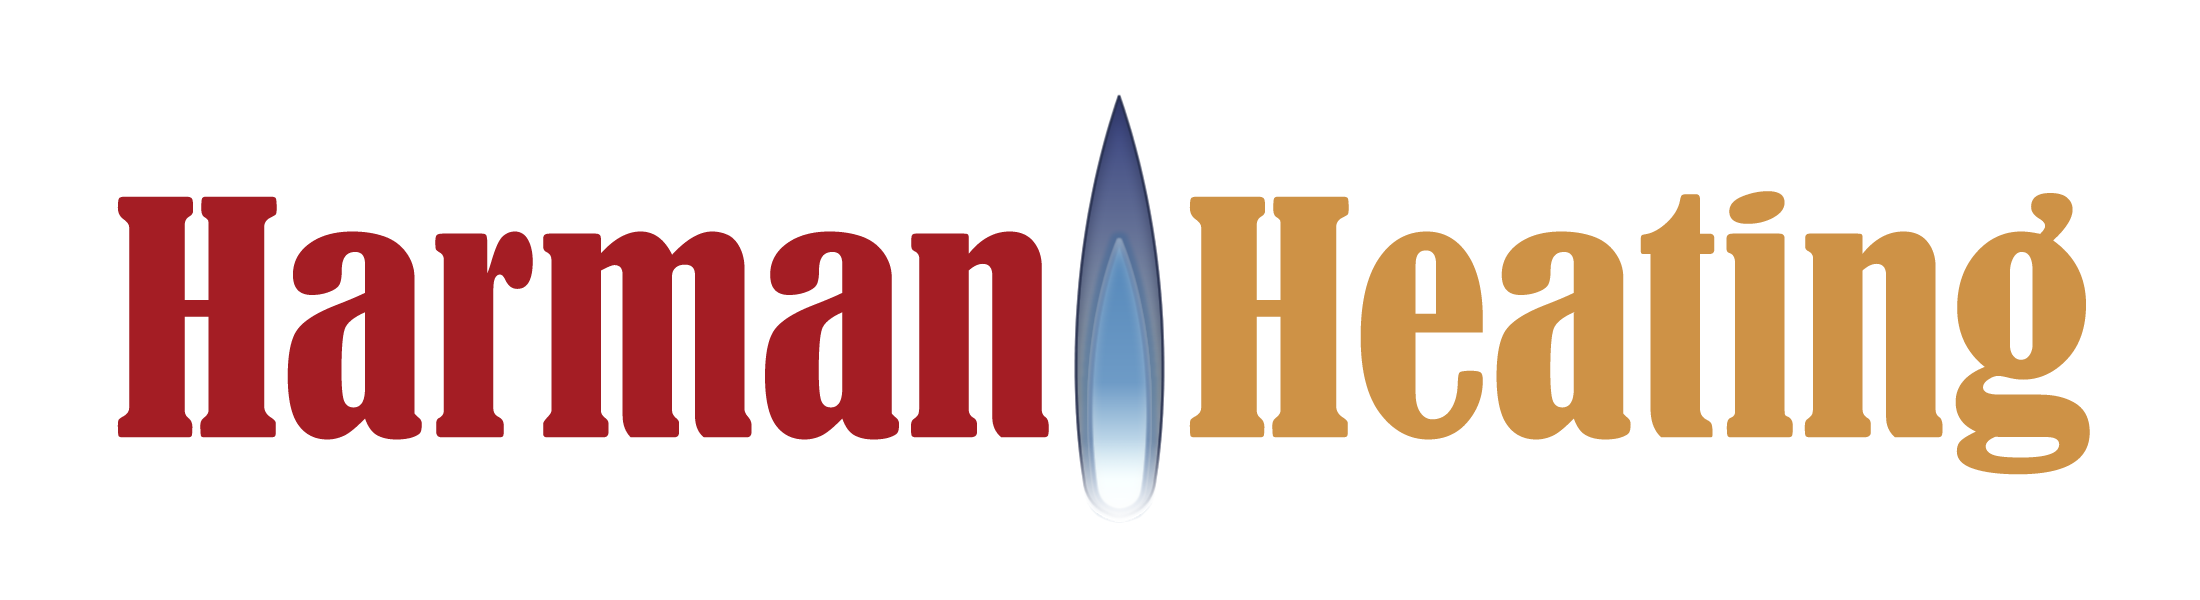 Harman Heating Logo transparent